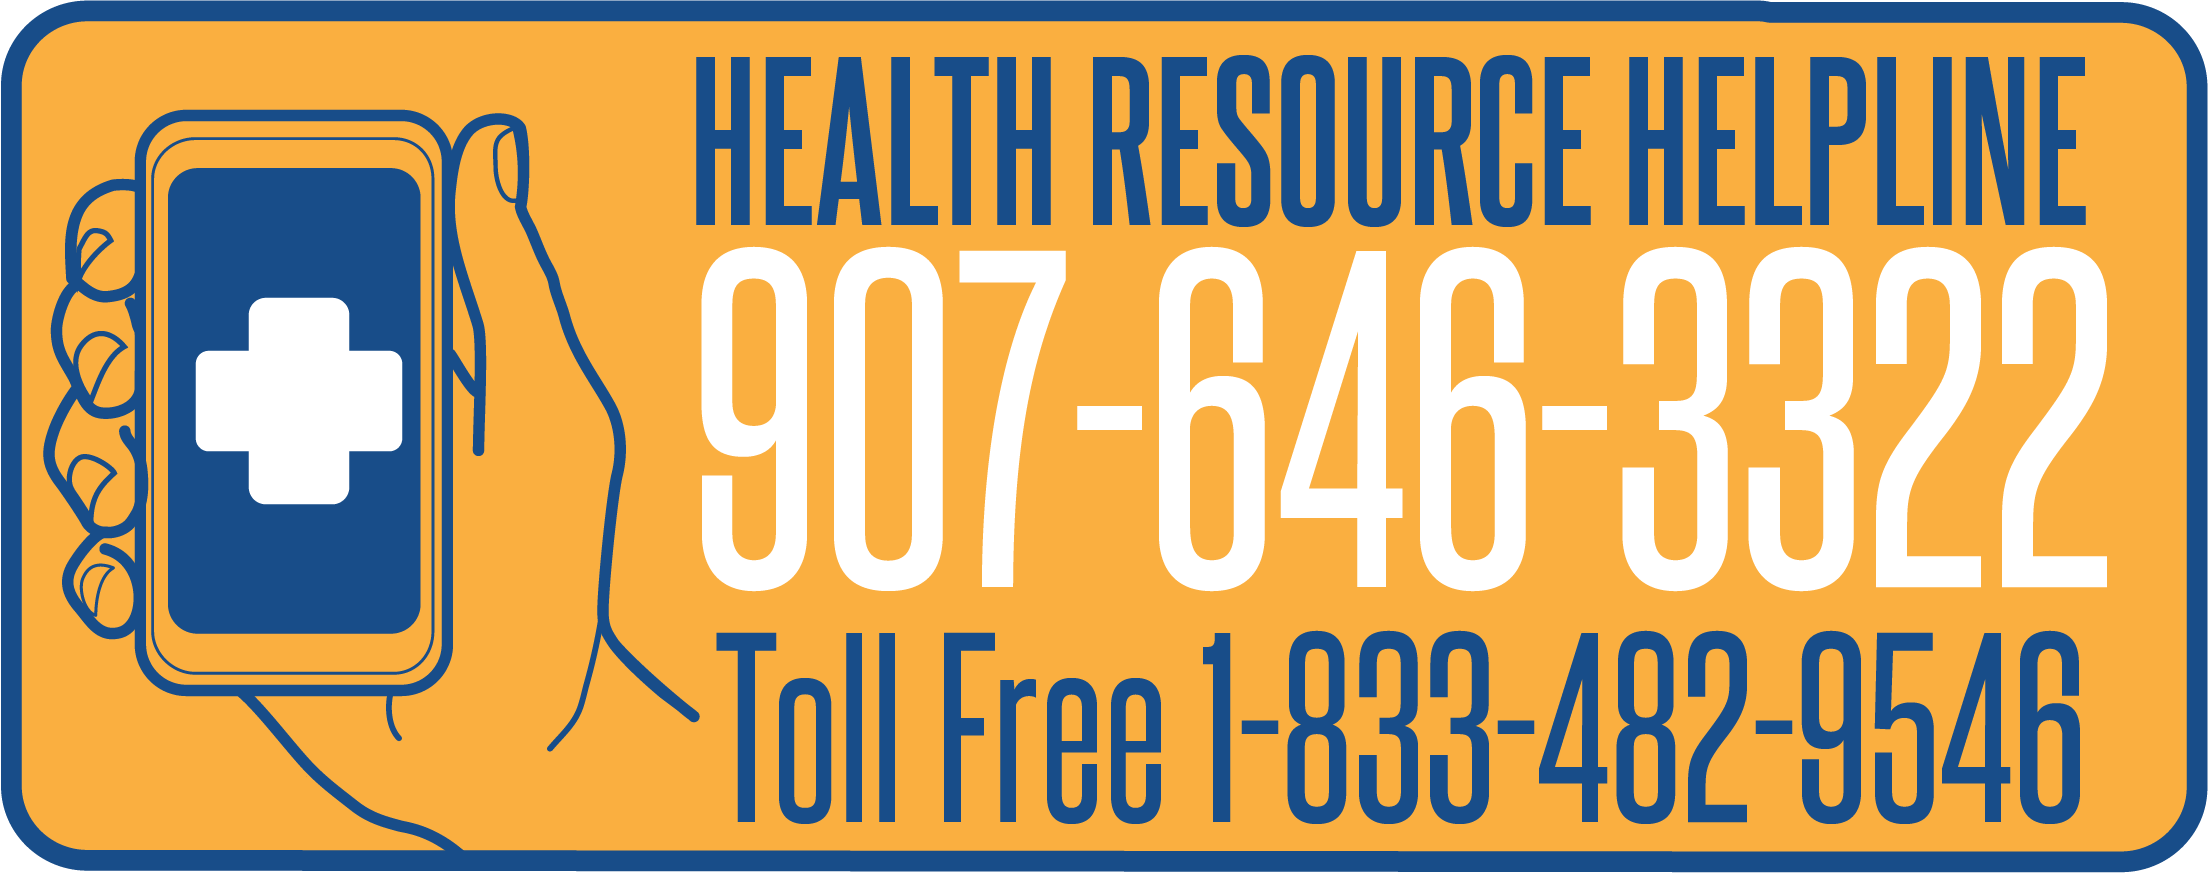 Health Resource Helpline 907-646-3322 Toll free 1-833-482-9546